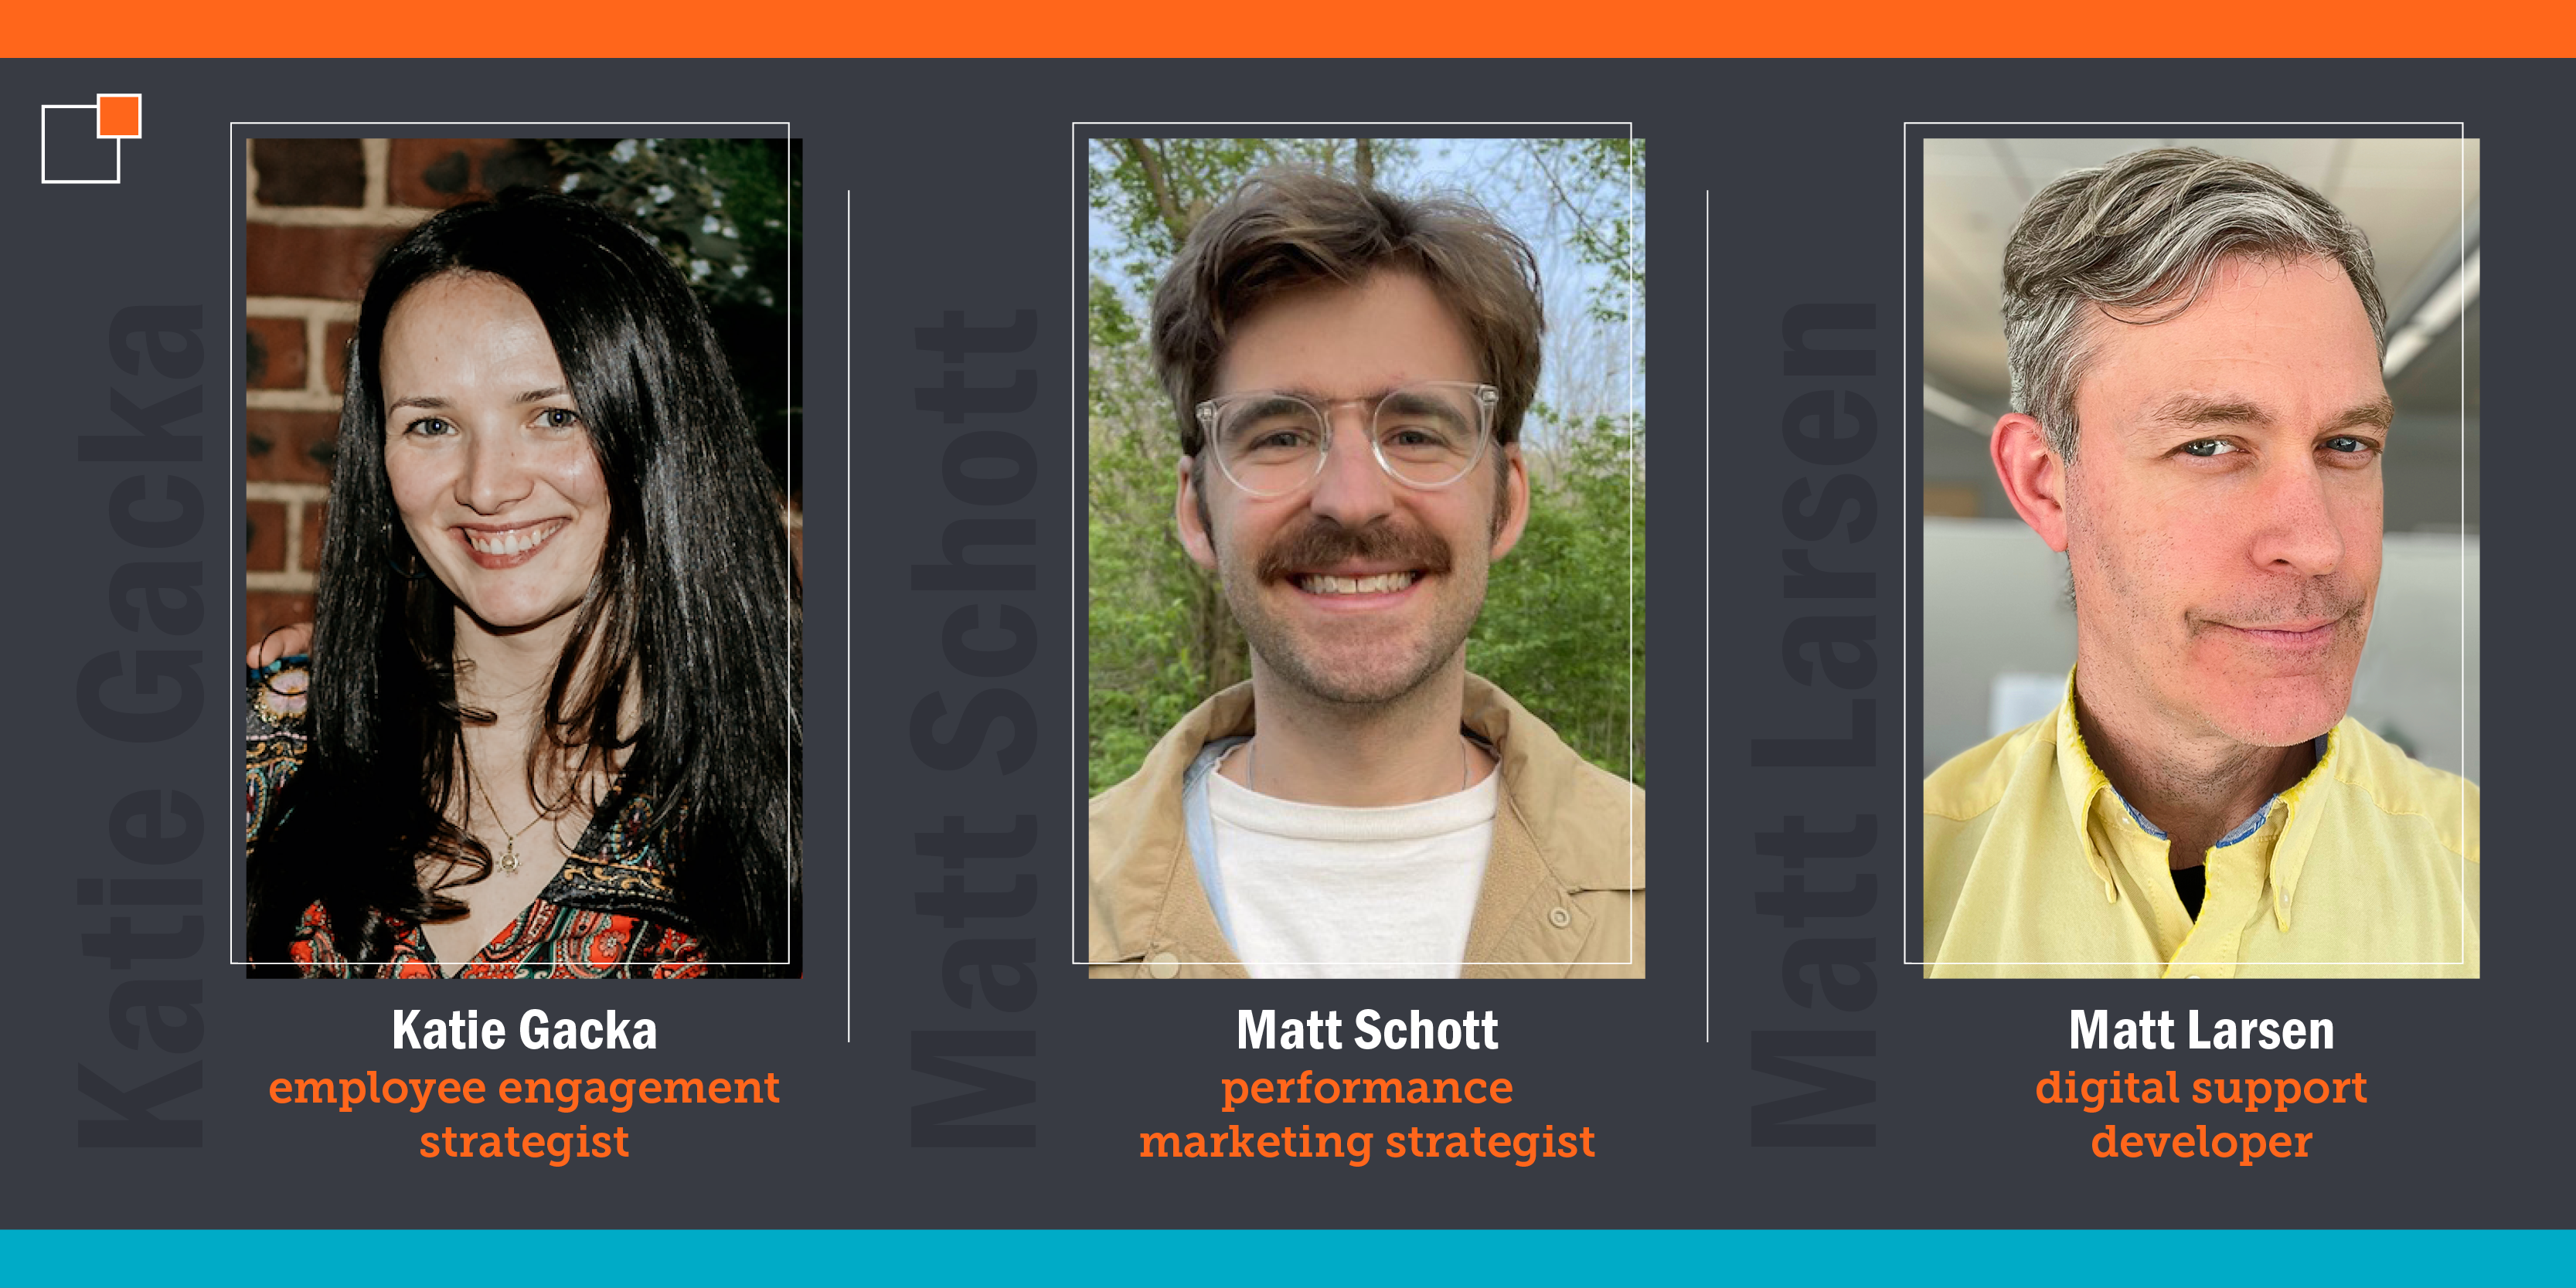 Katie Gacka - Employee Engagement Strategist, Matt Schott - Performance Marketing Strategist - Marketing Automation Lead, Matt Larsen - Digital Support Developer